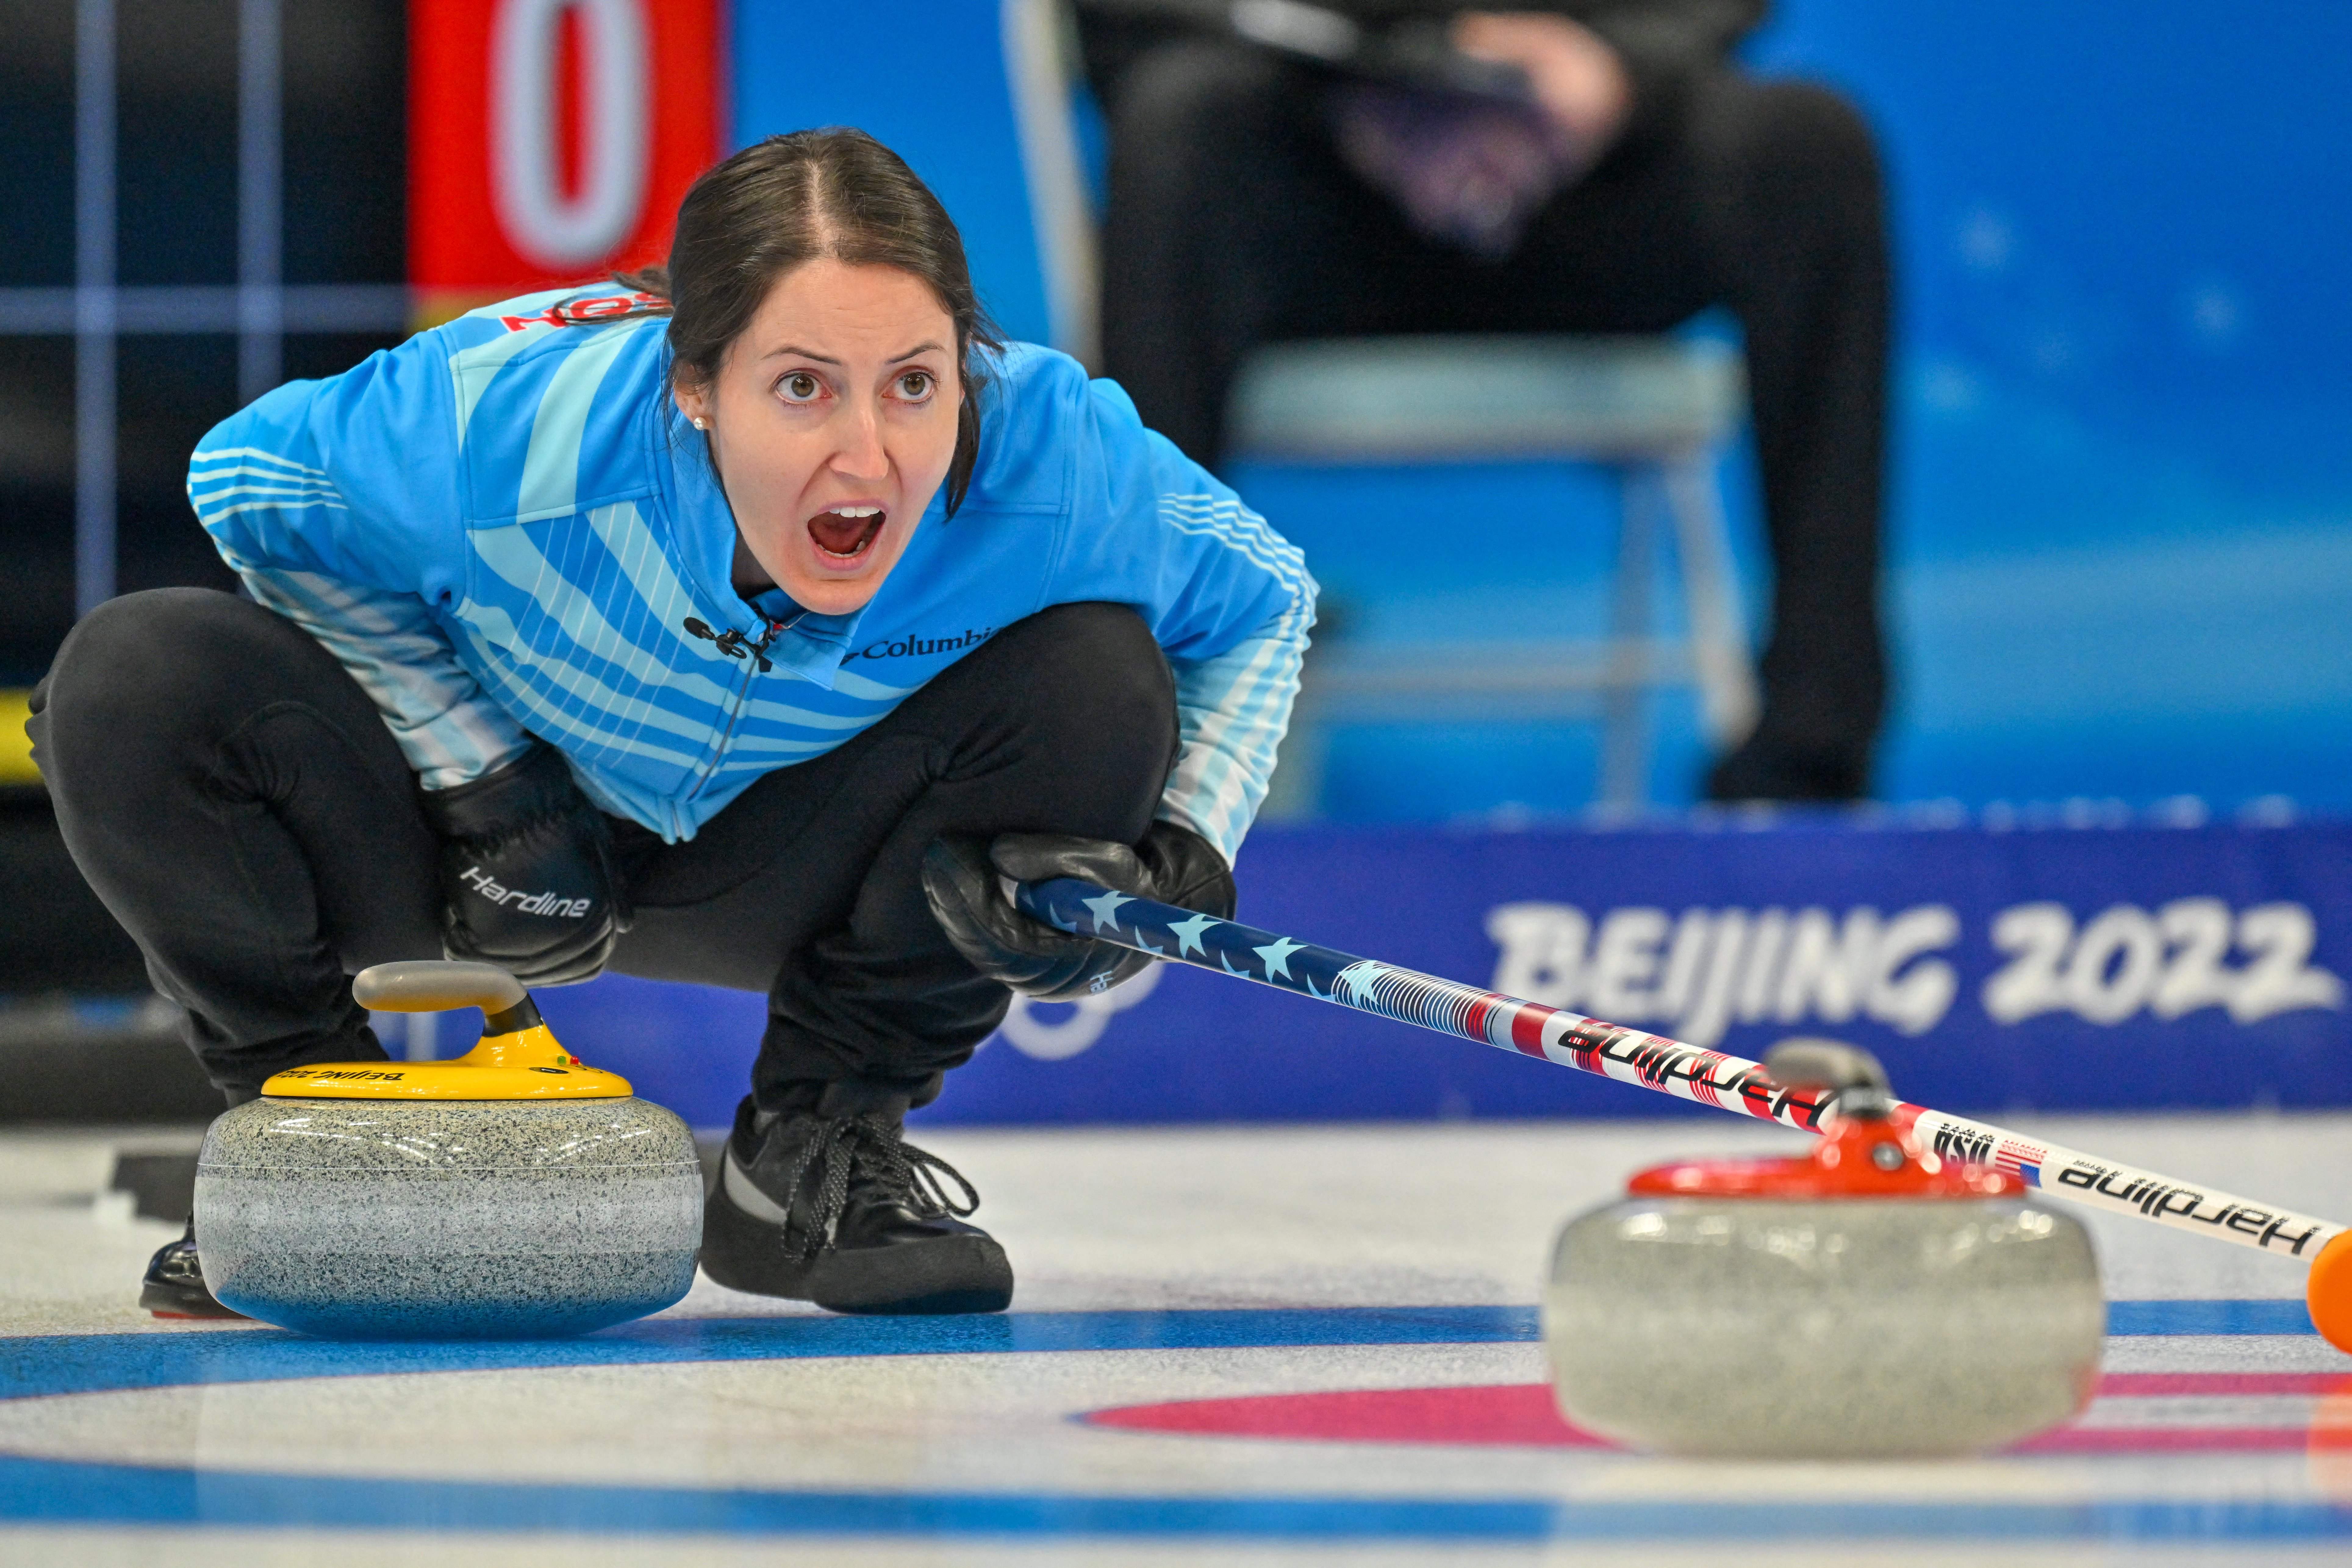 After Strong 3 0 Start In Beijing Us Women S Curling Stumbles Vs Sweden The Boston Globe